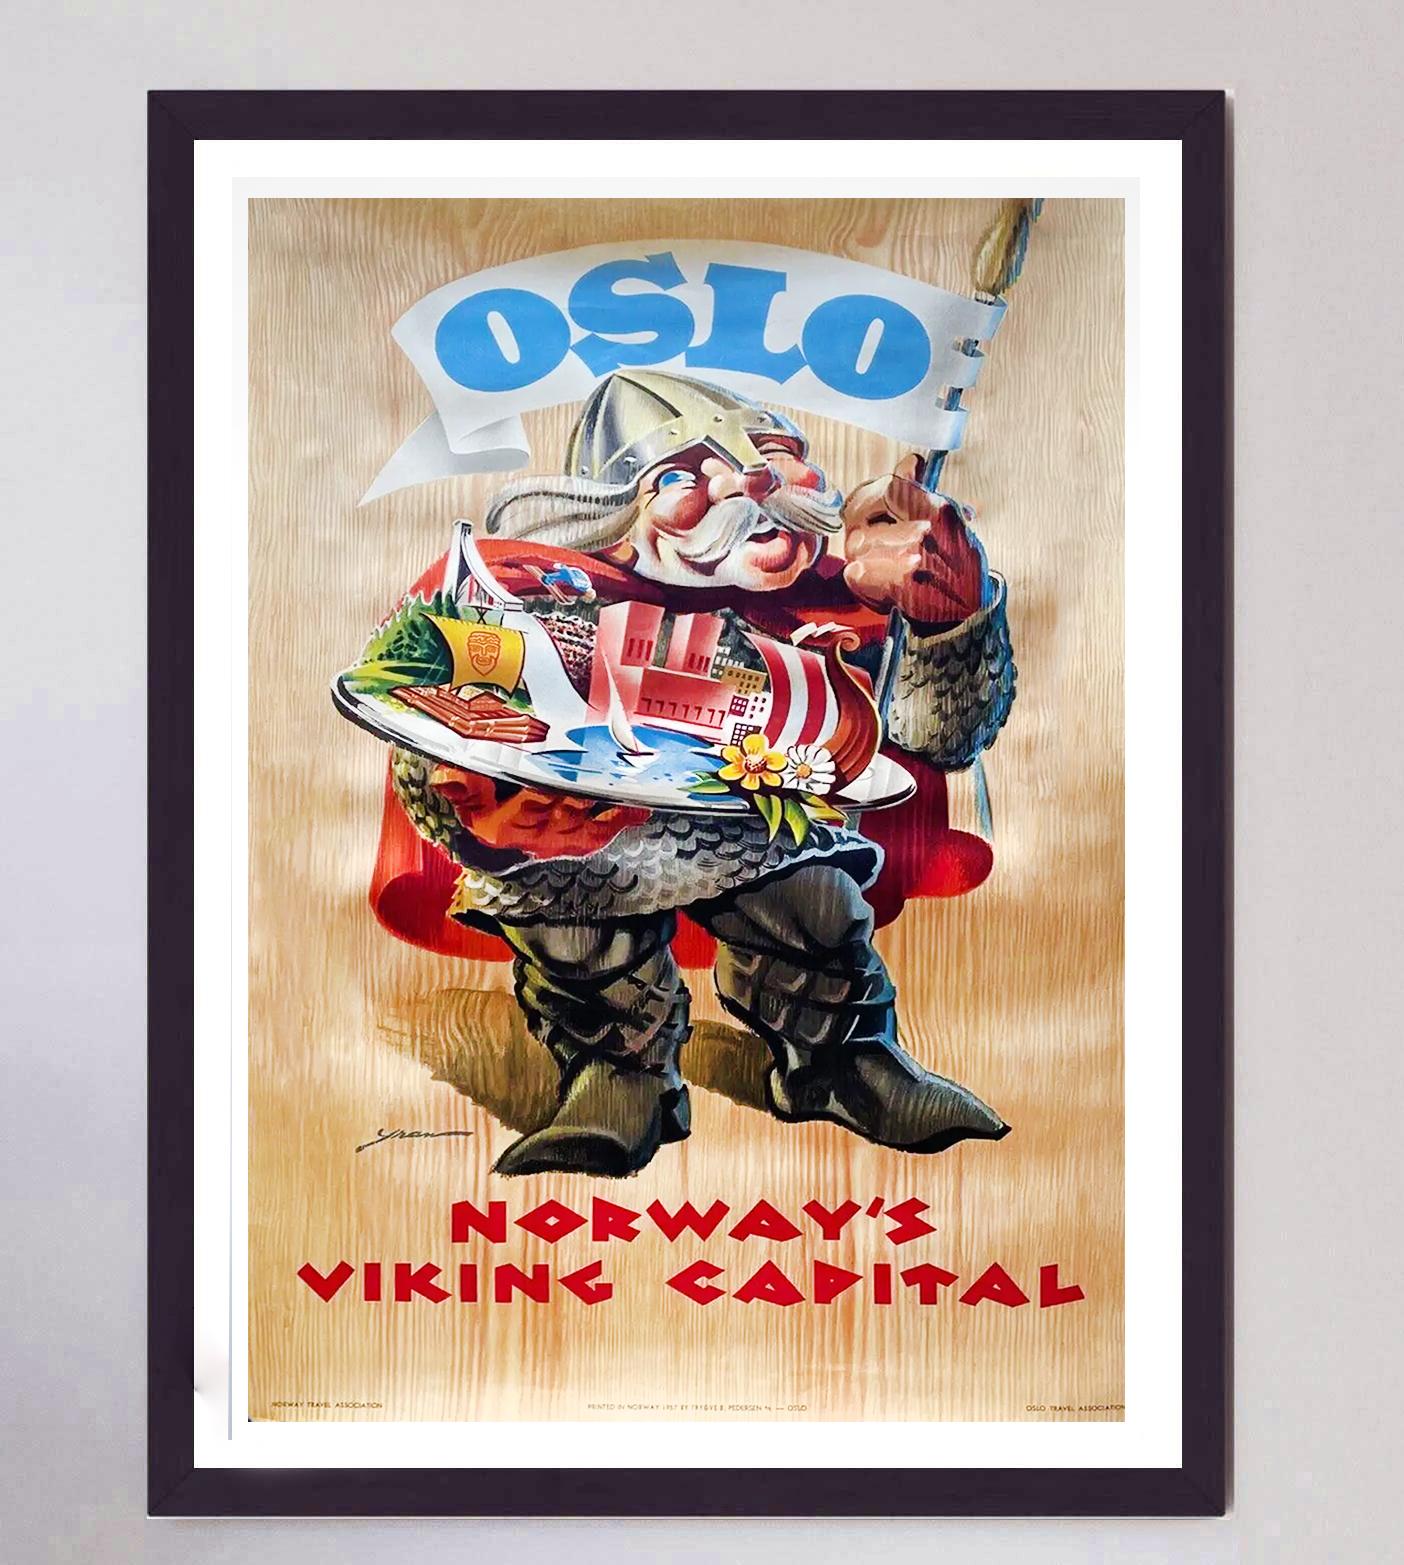 Norwegian 1957 Oslo - Norway's Viking Capital Original Vintage Poster For Sale